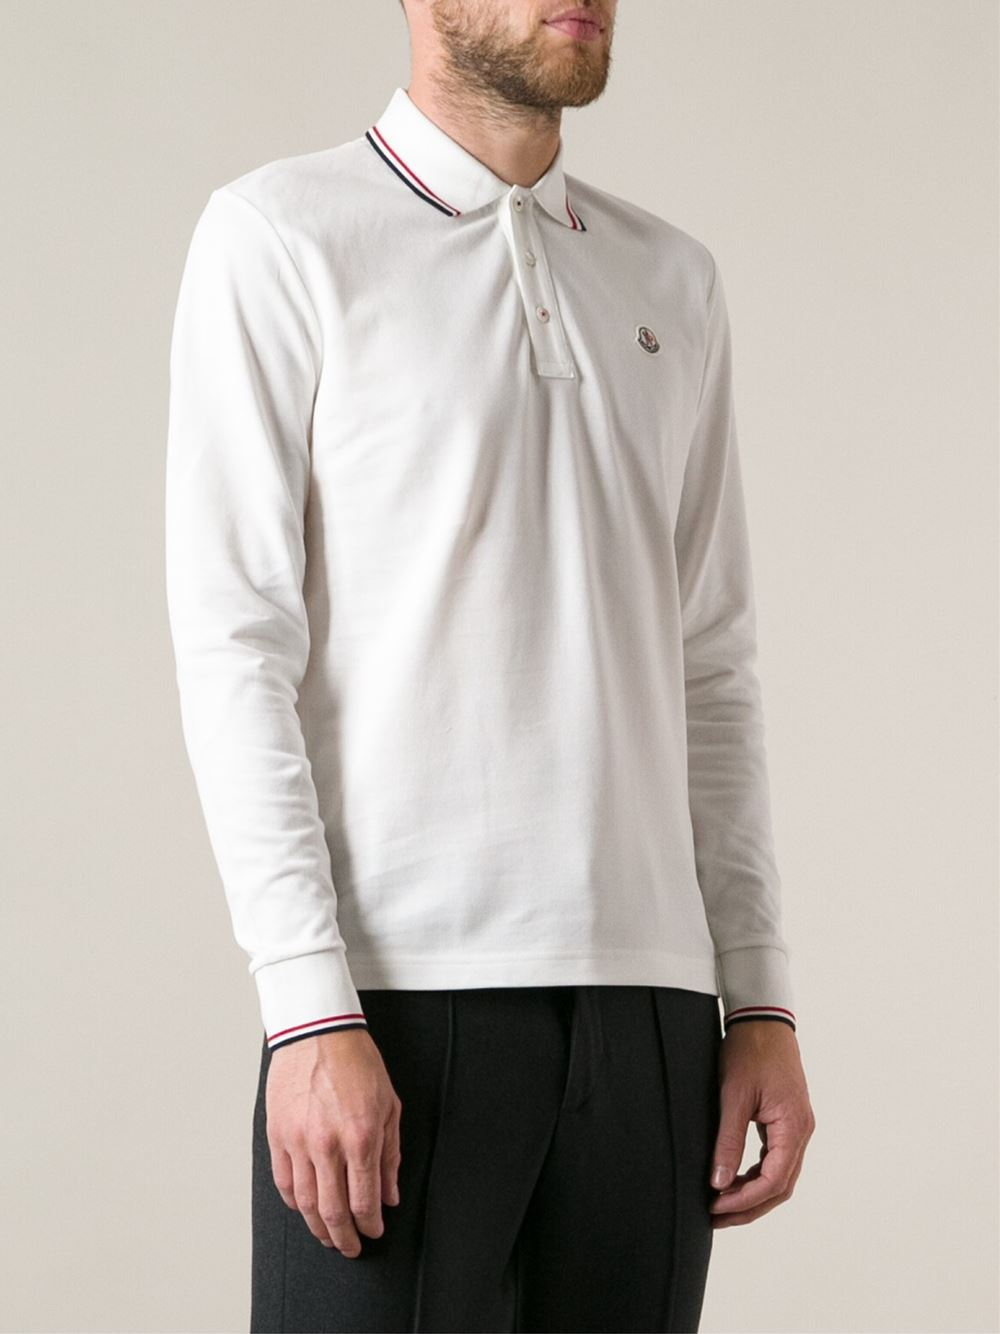 Lyst - Moncler Long Sleeve Polo Shirt in White for Men